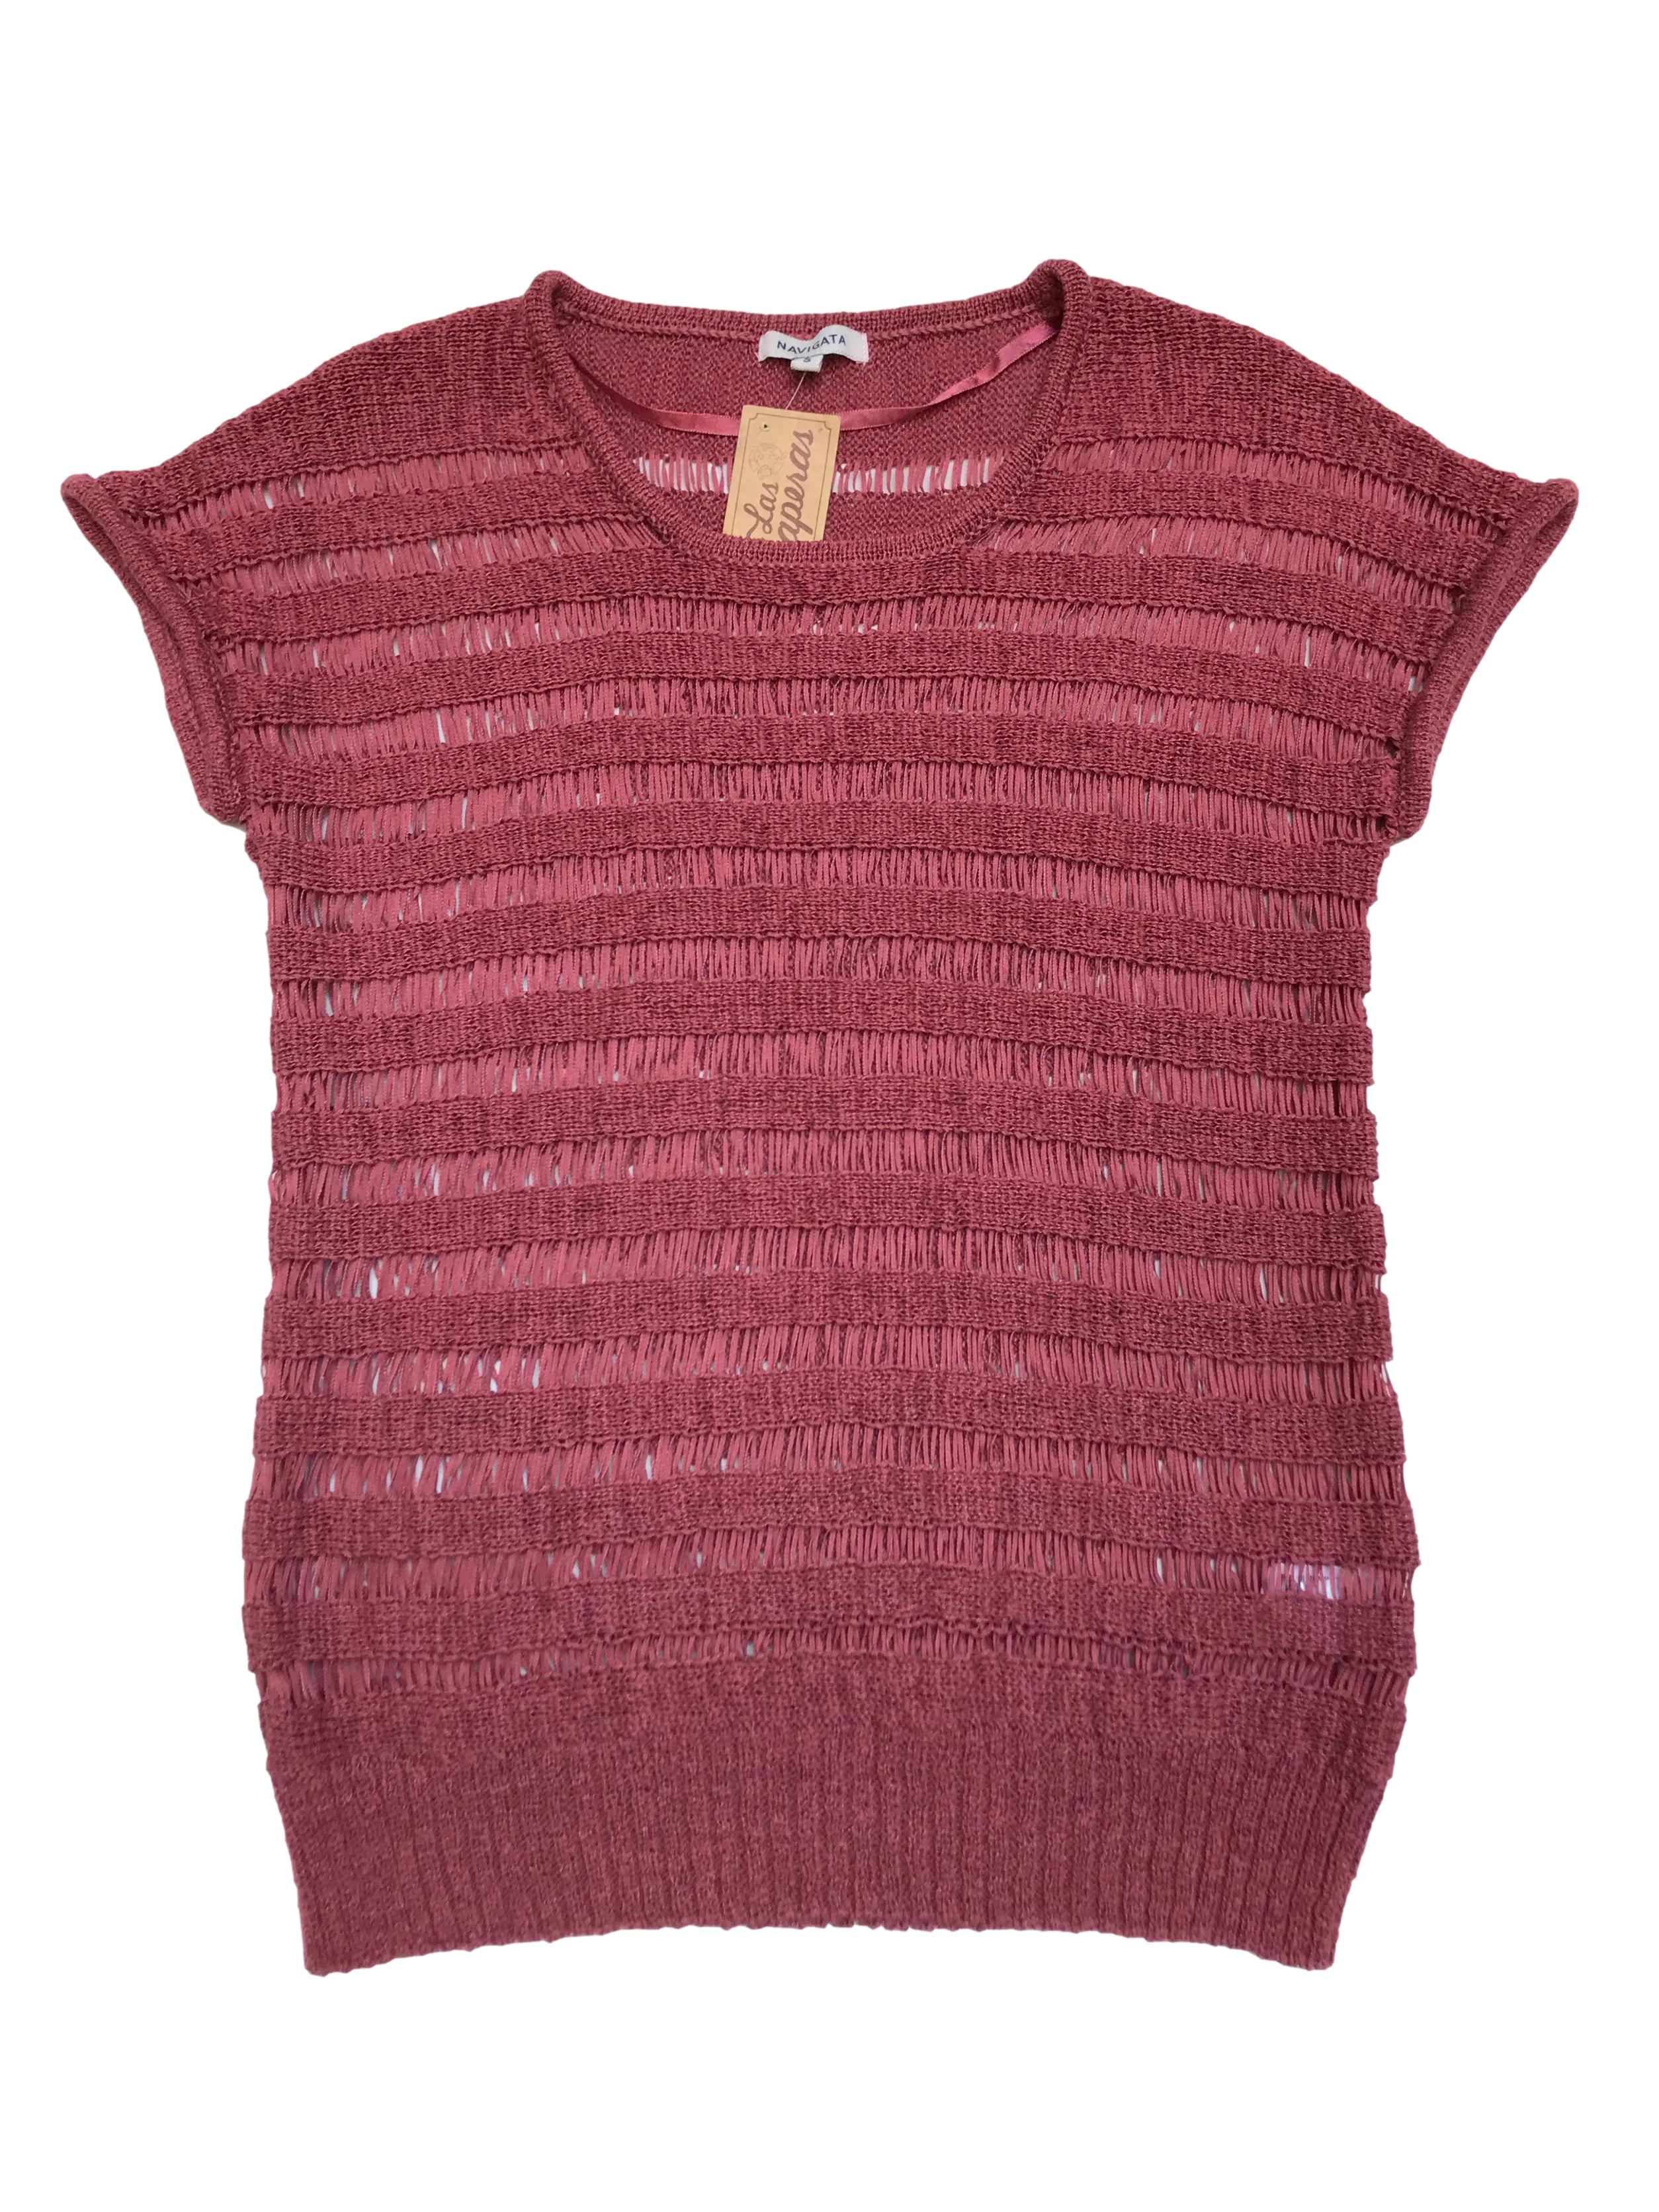 Sweater Navigata tejido en dos puntos con franjas caladas